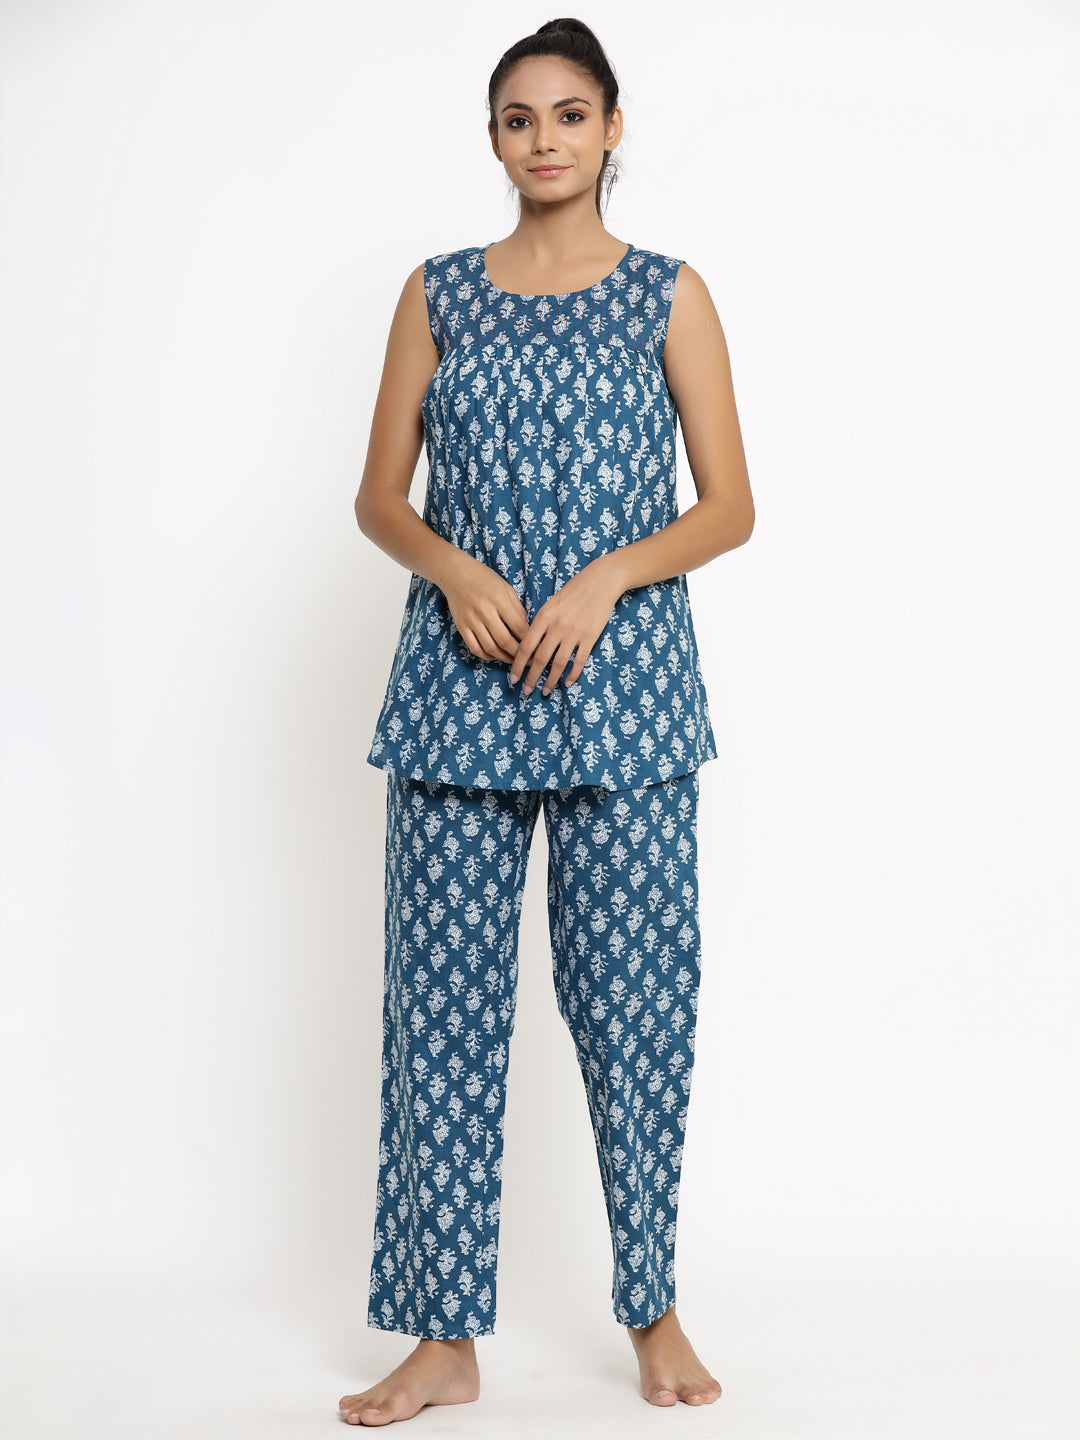 Women's Self Desgin Cotton Fabric  Night Suit Blue Color - Kipek